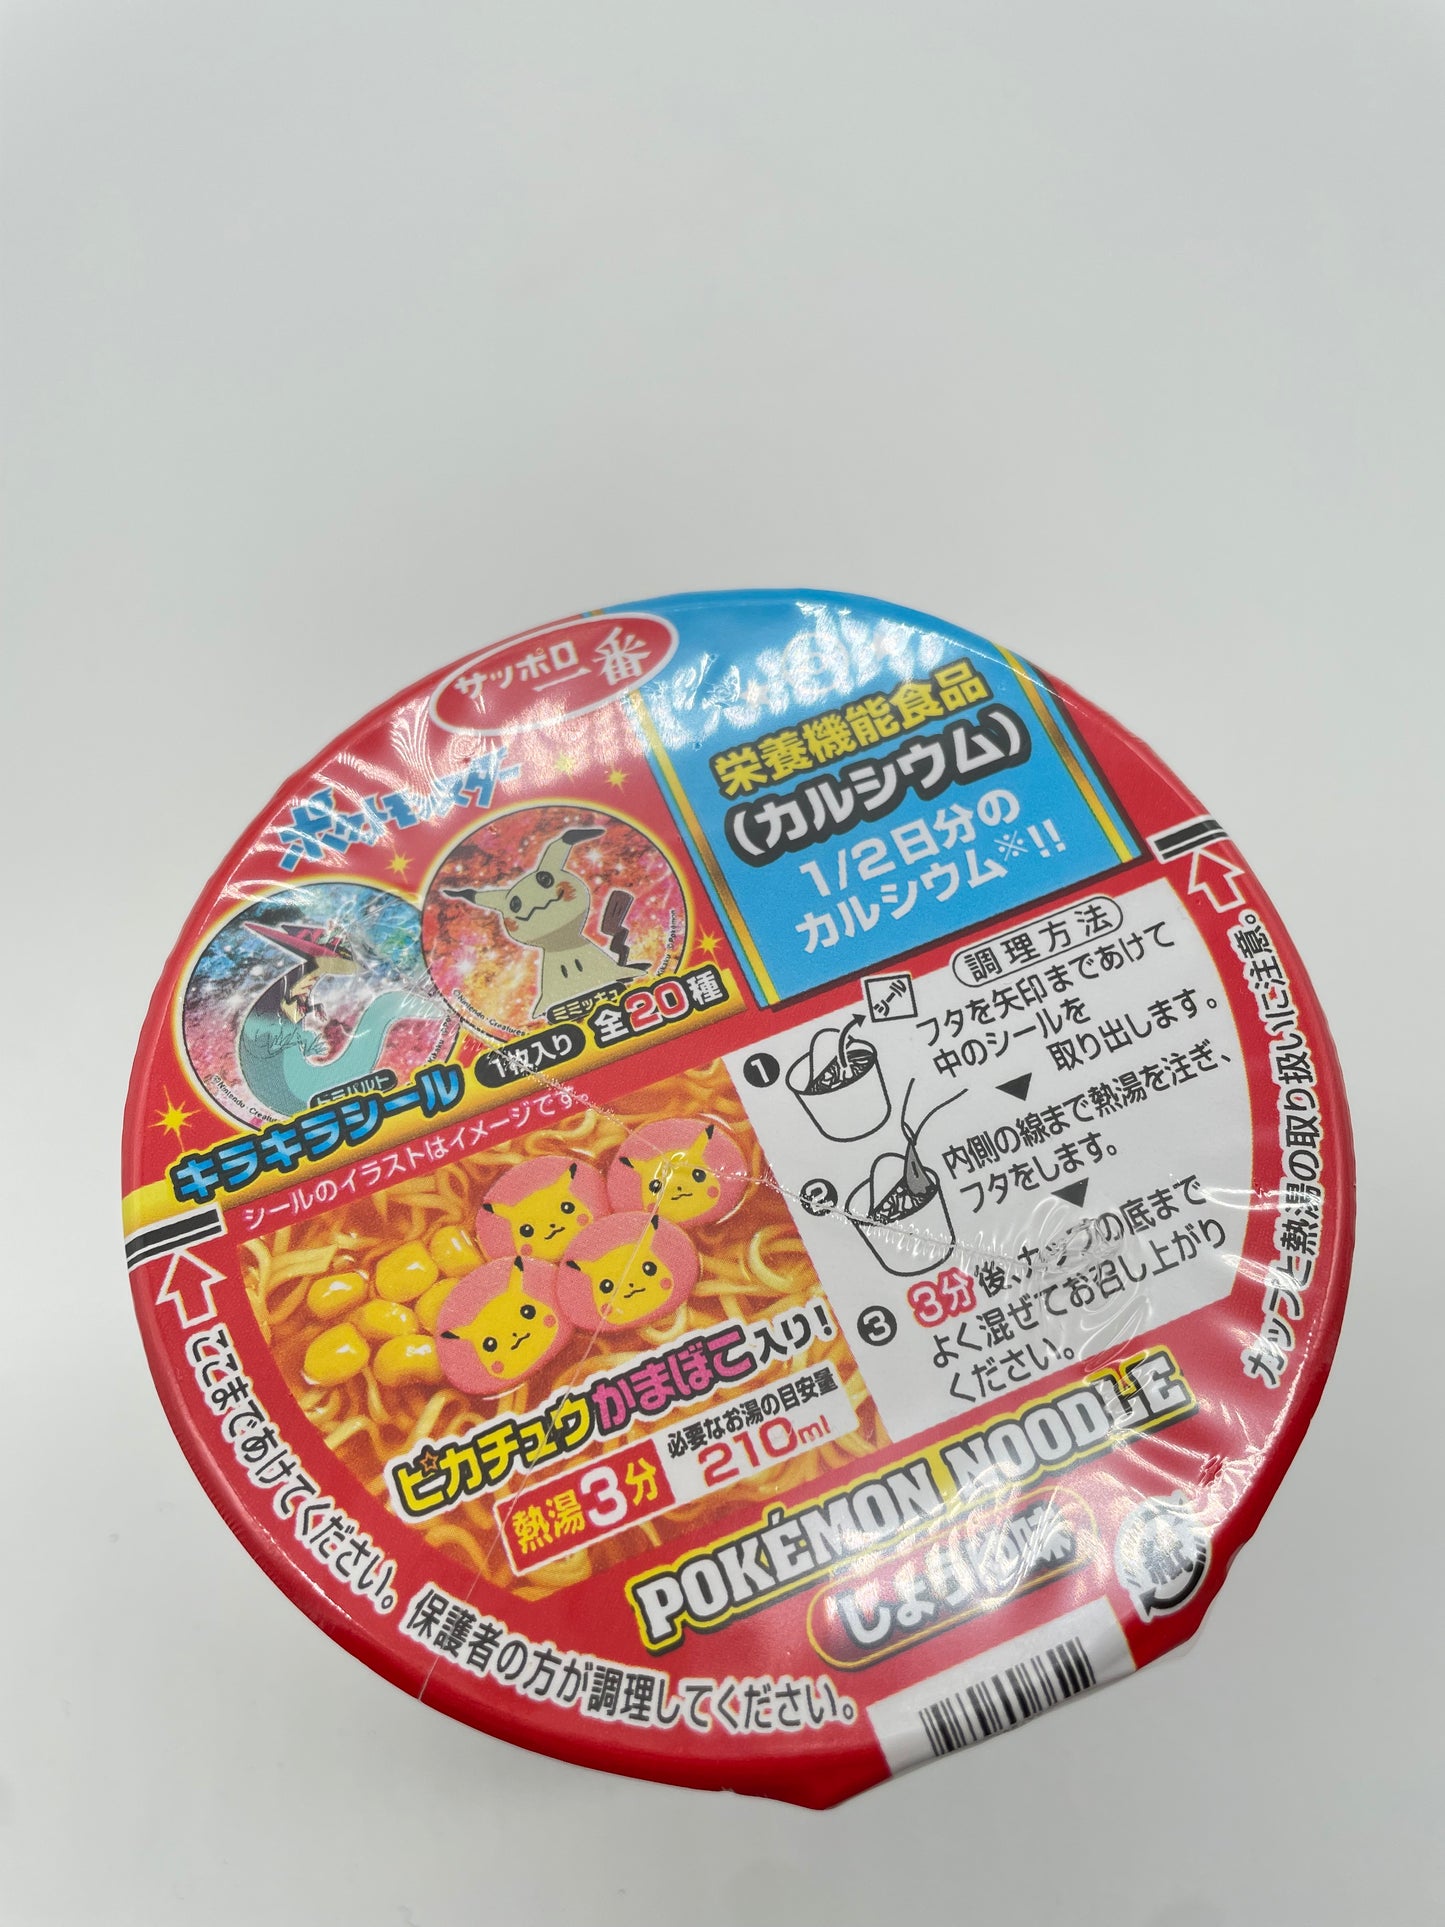 Pokémon Cup Nudeln (Shoyu) - SANYO Sapporo Ichiban